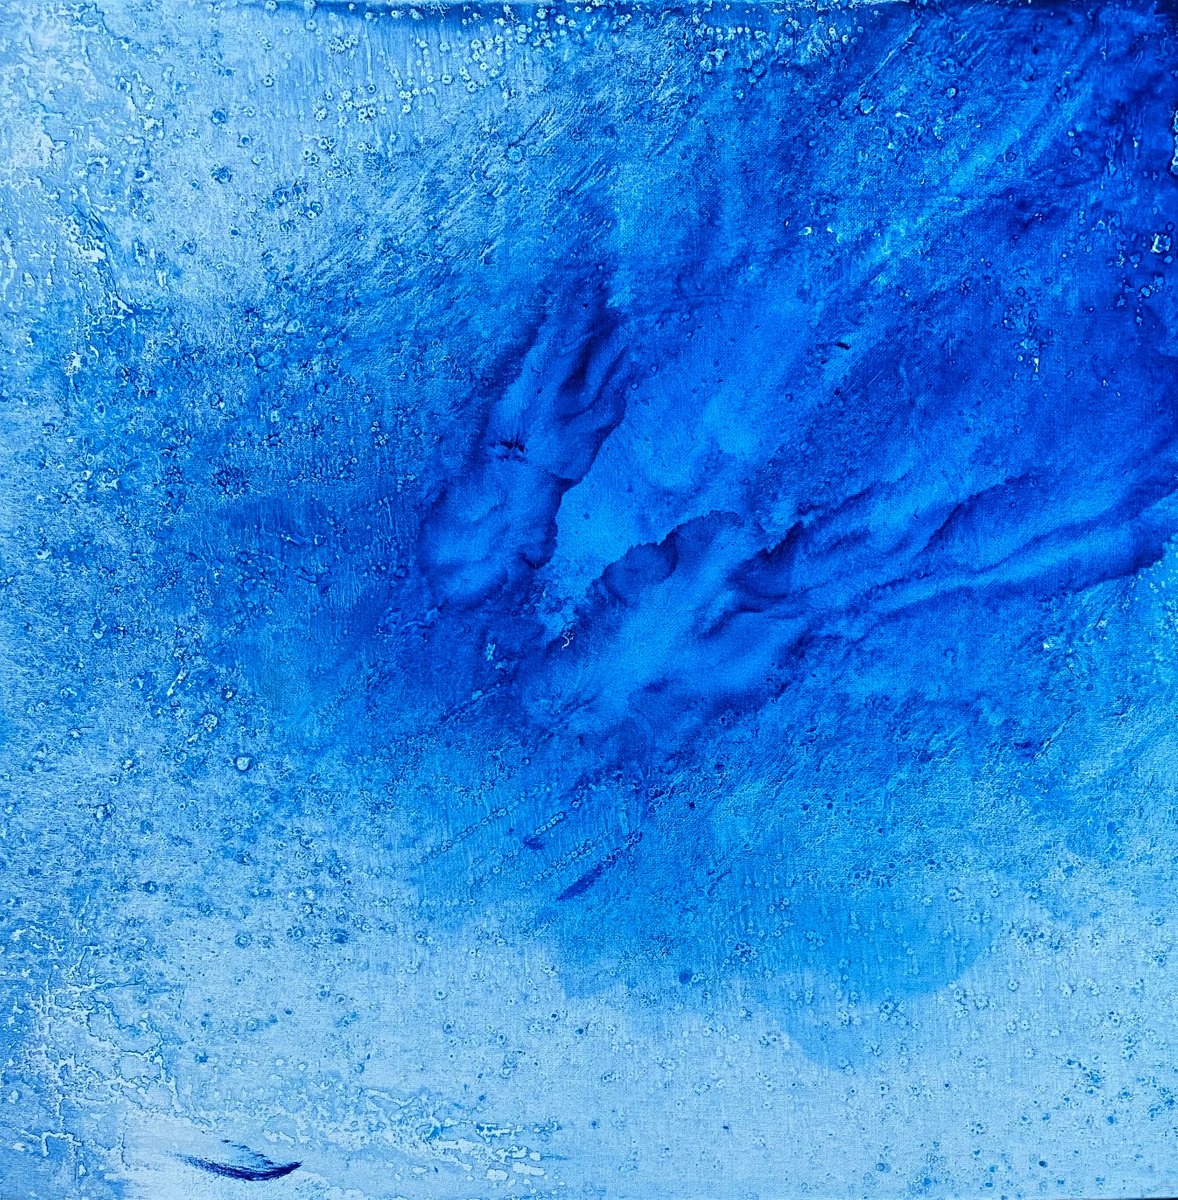 Blue abstract painting 2205202009 by Natalya Burgos